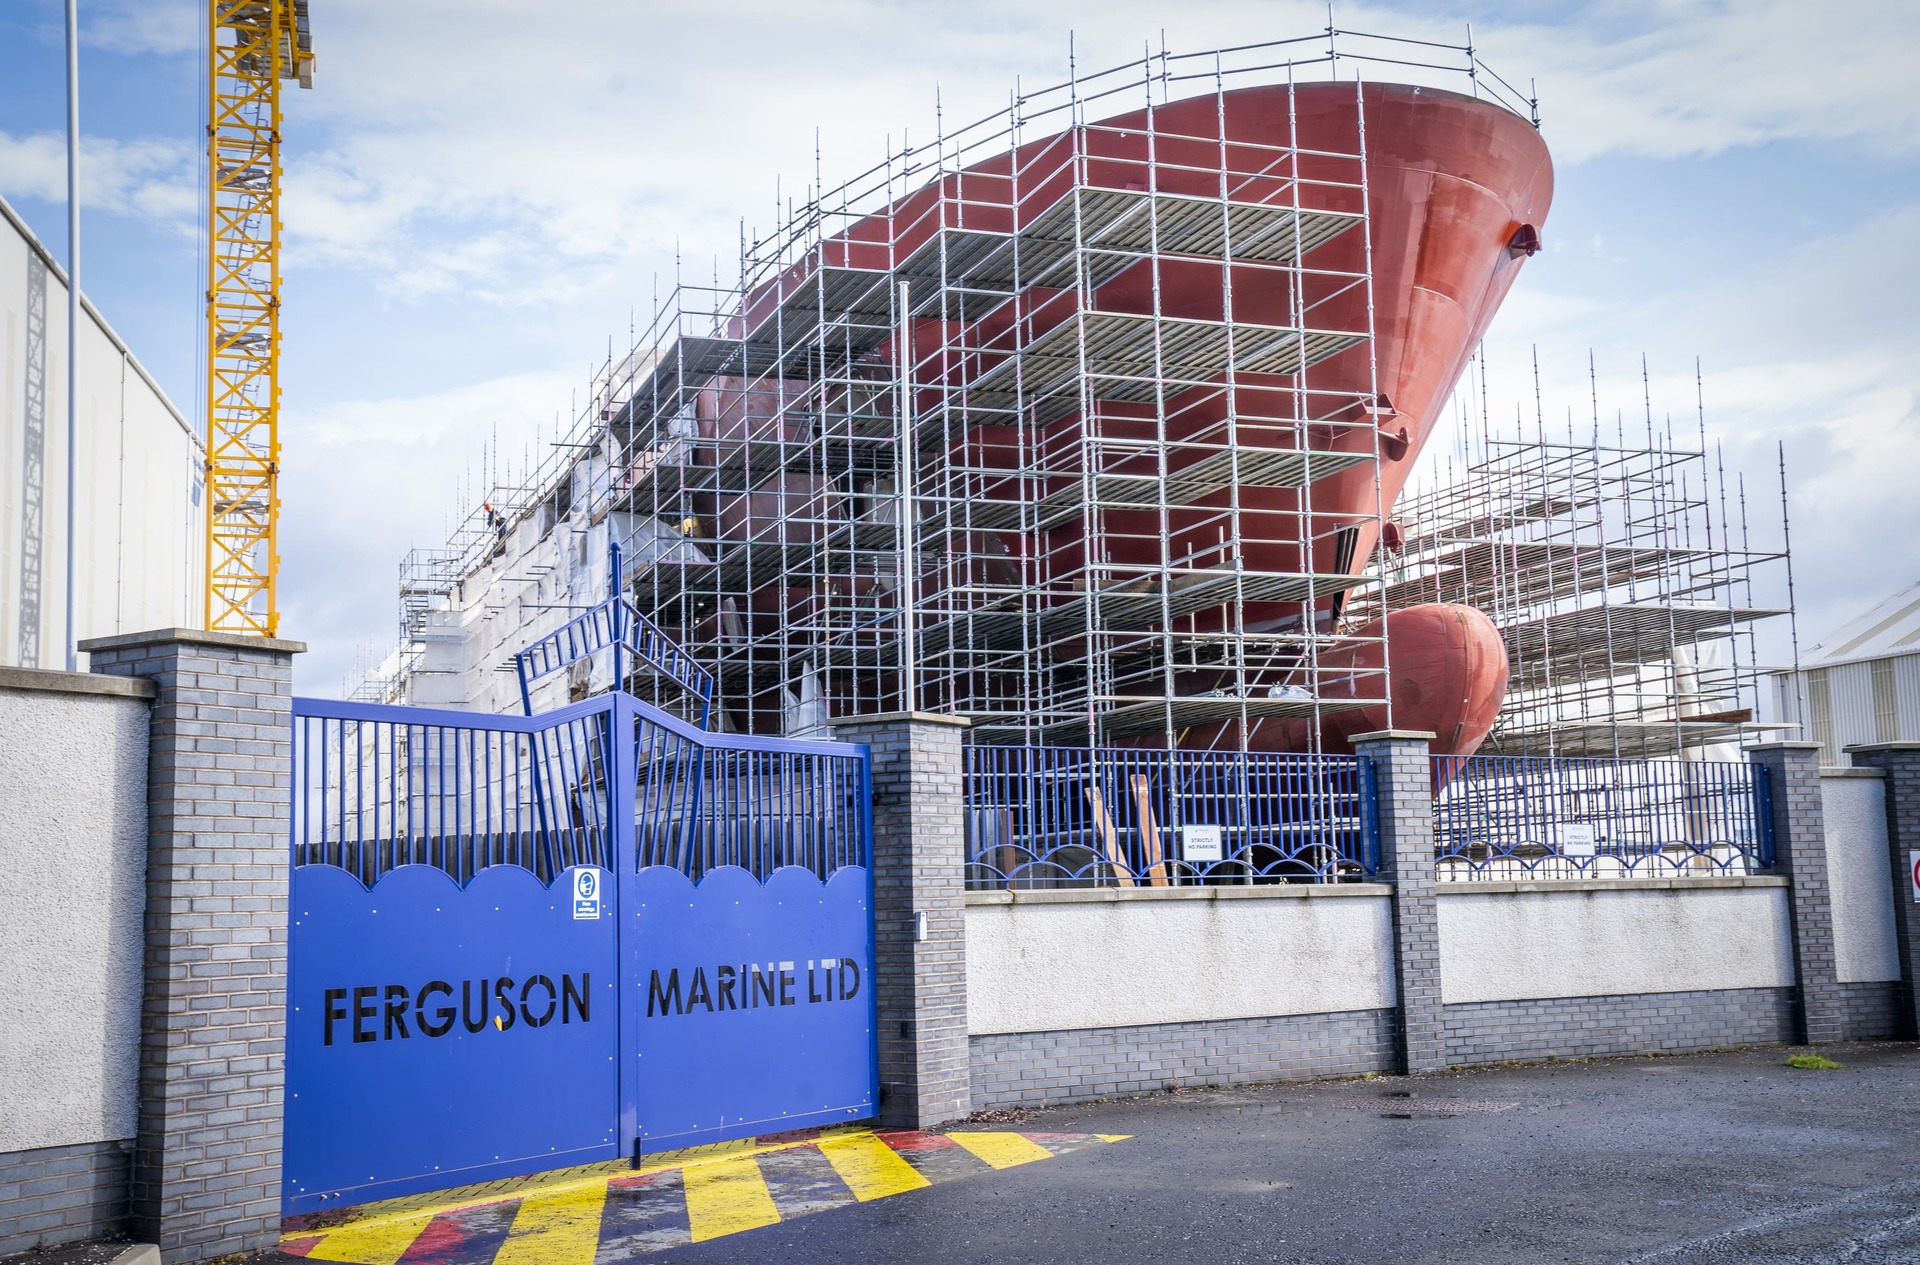 Hull 802 remains under construction at Ferguson Marine.